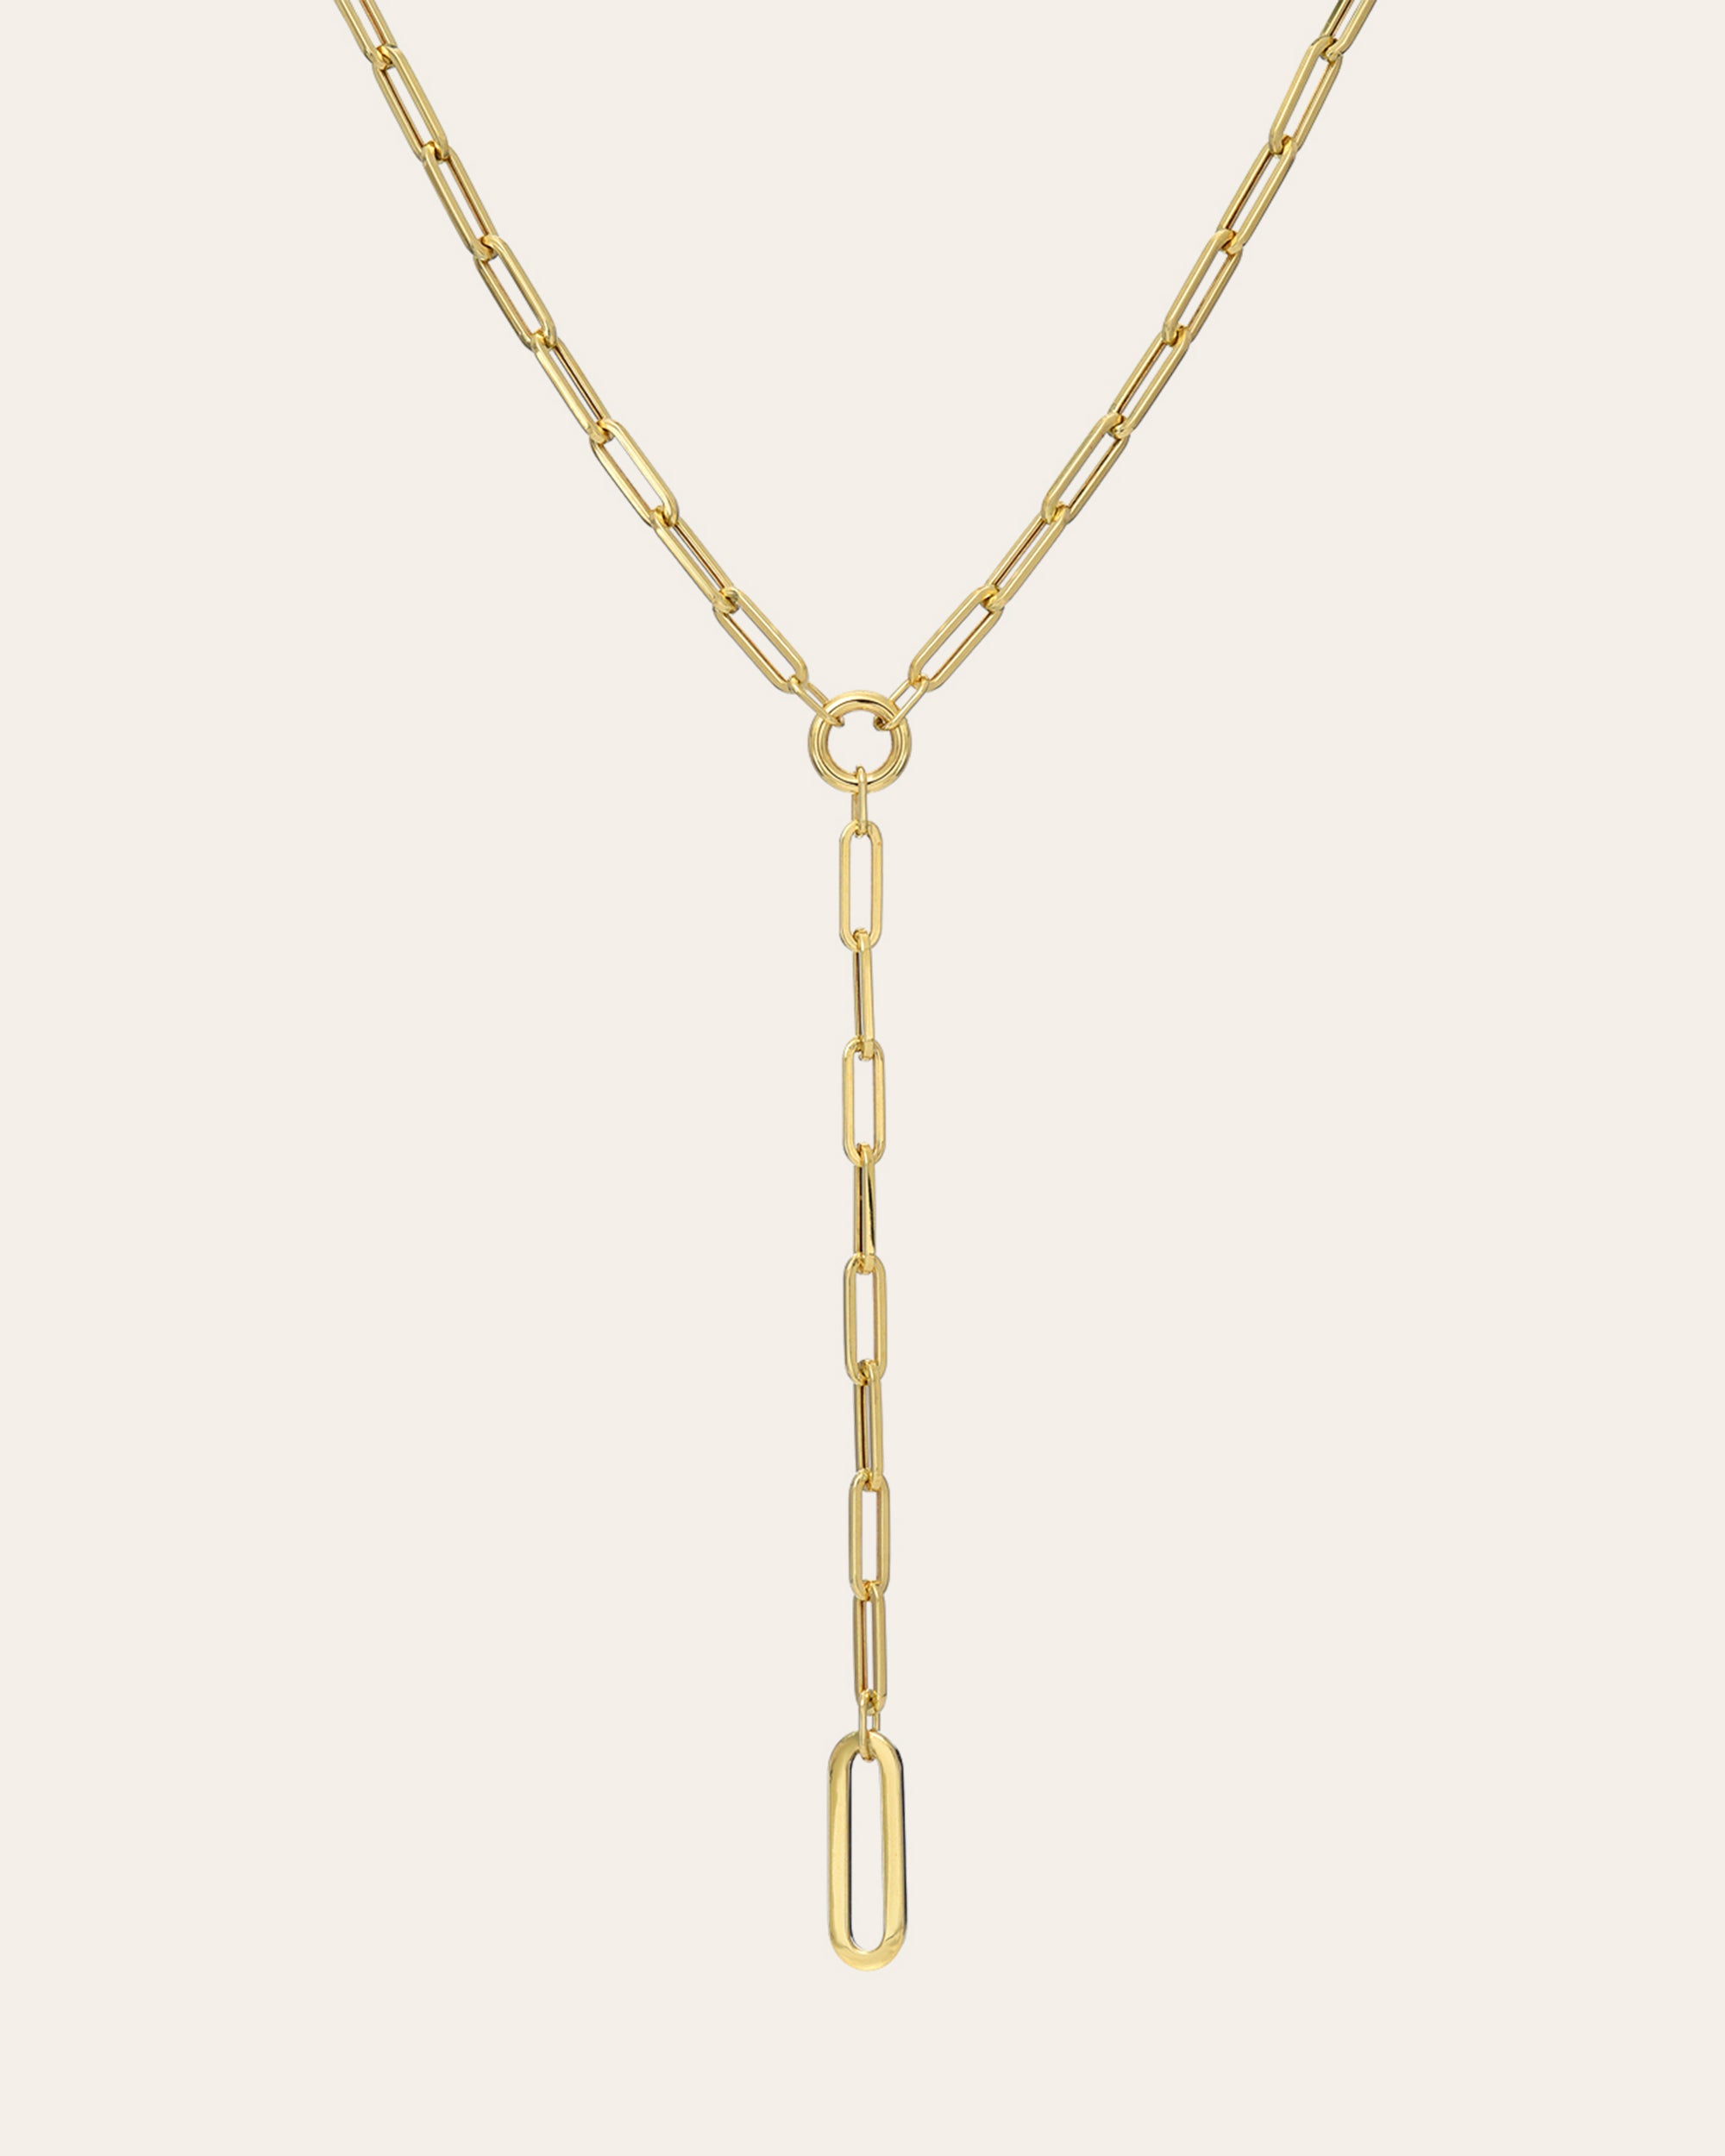 Corocraft Bezel Set glass Gold plat Chain Link Necklace . Long Length  Sautoir E